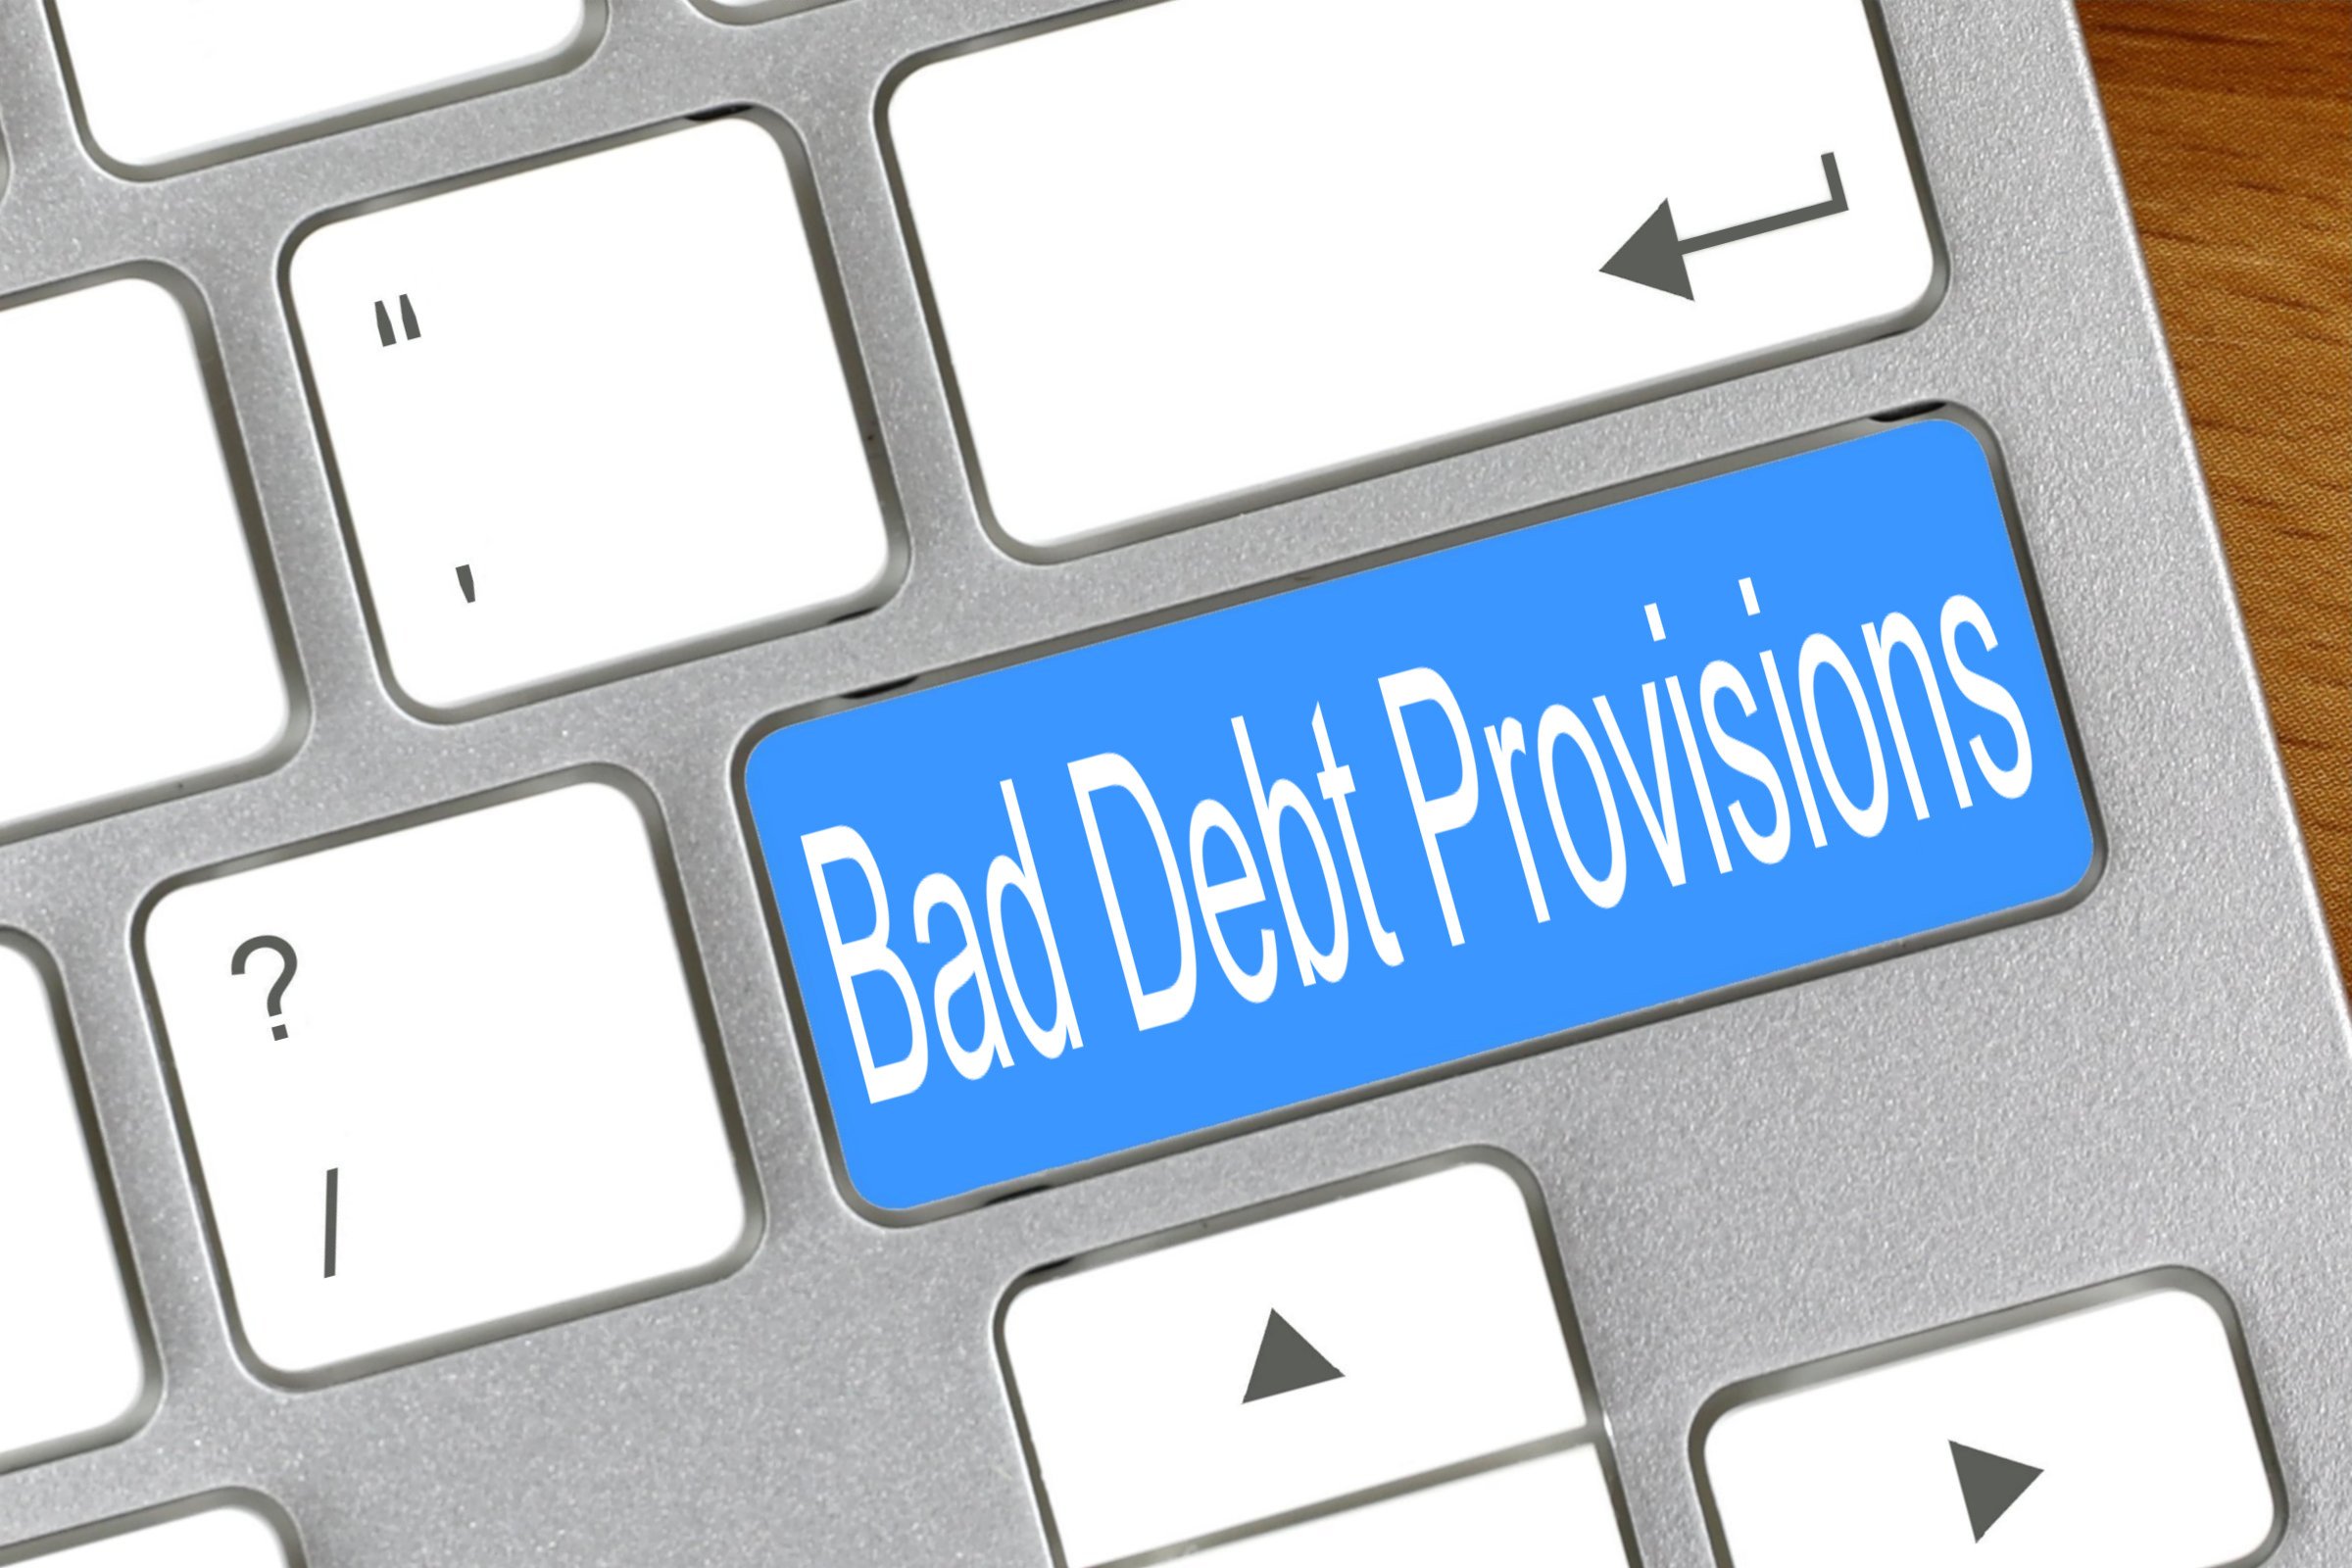 bad debt provisions